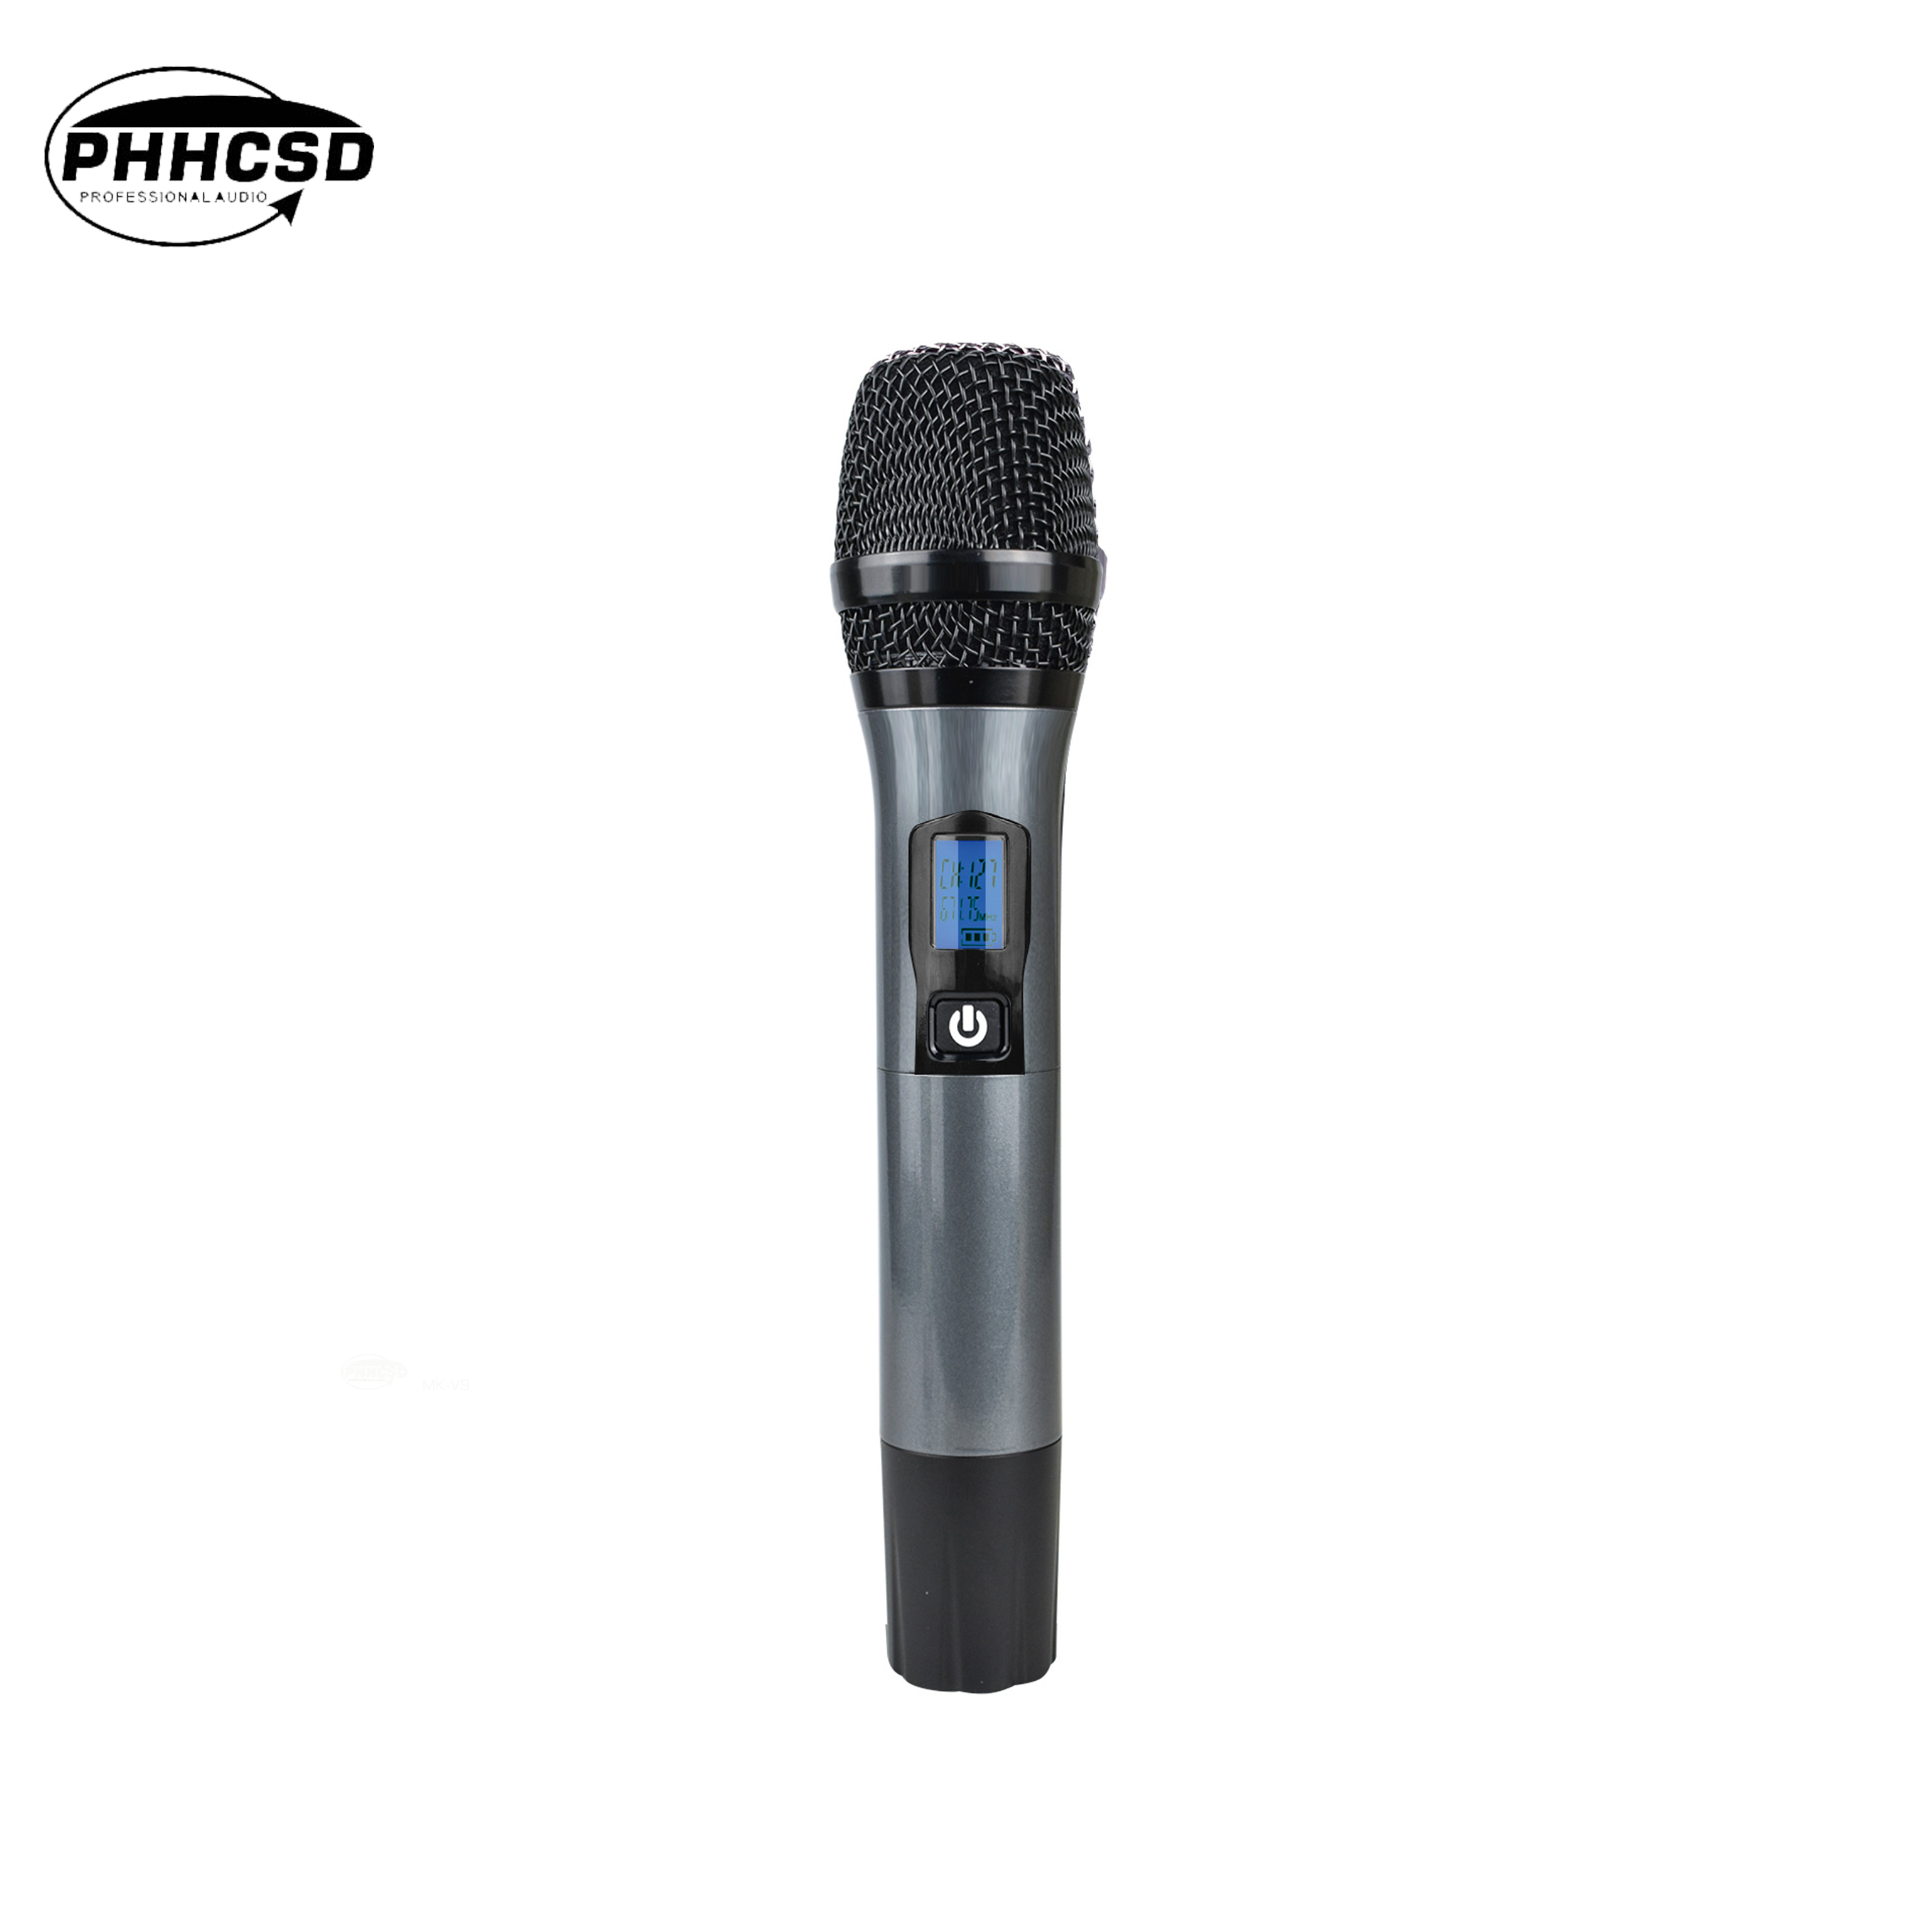 V9 UHF wireless microphone